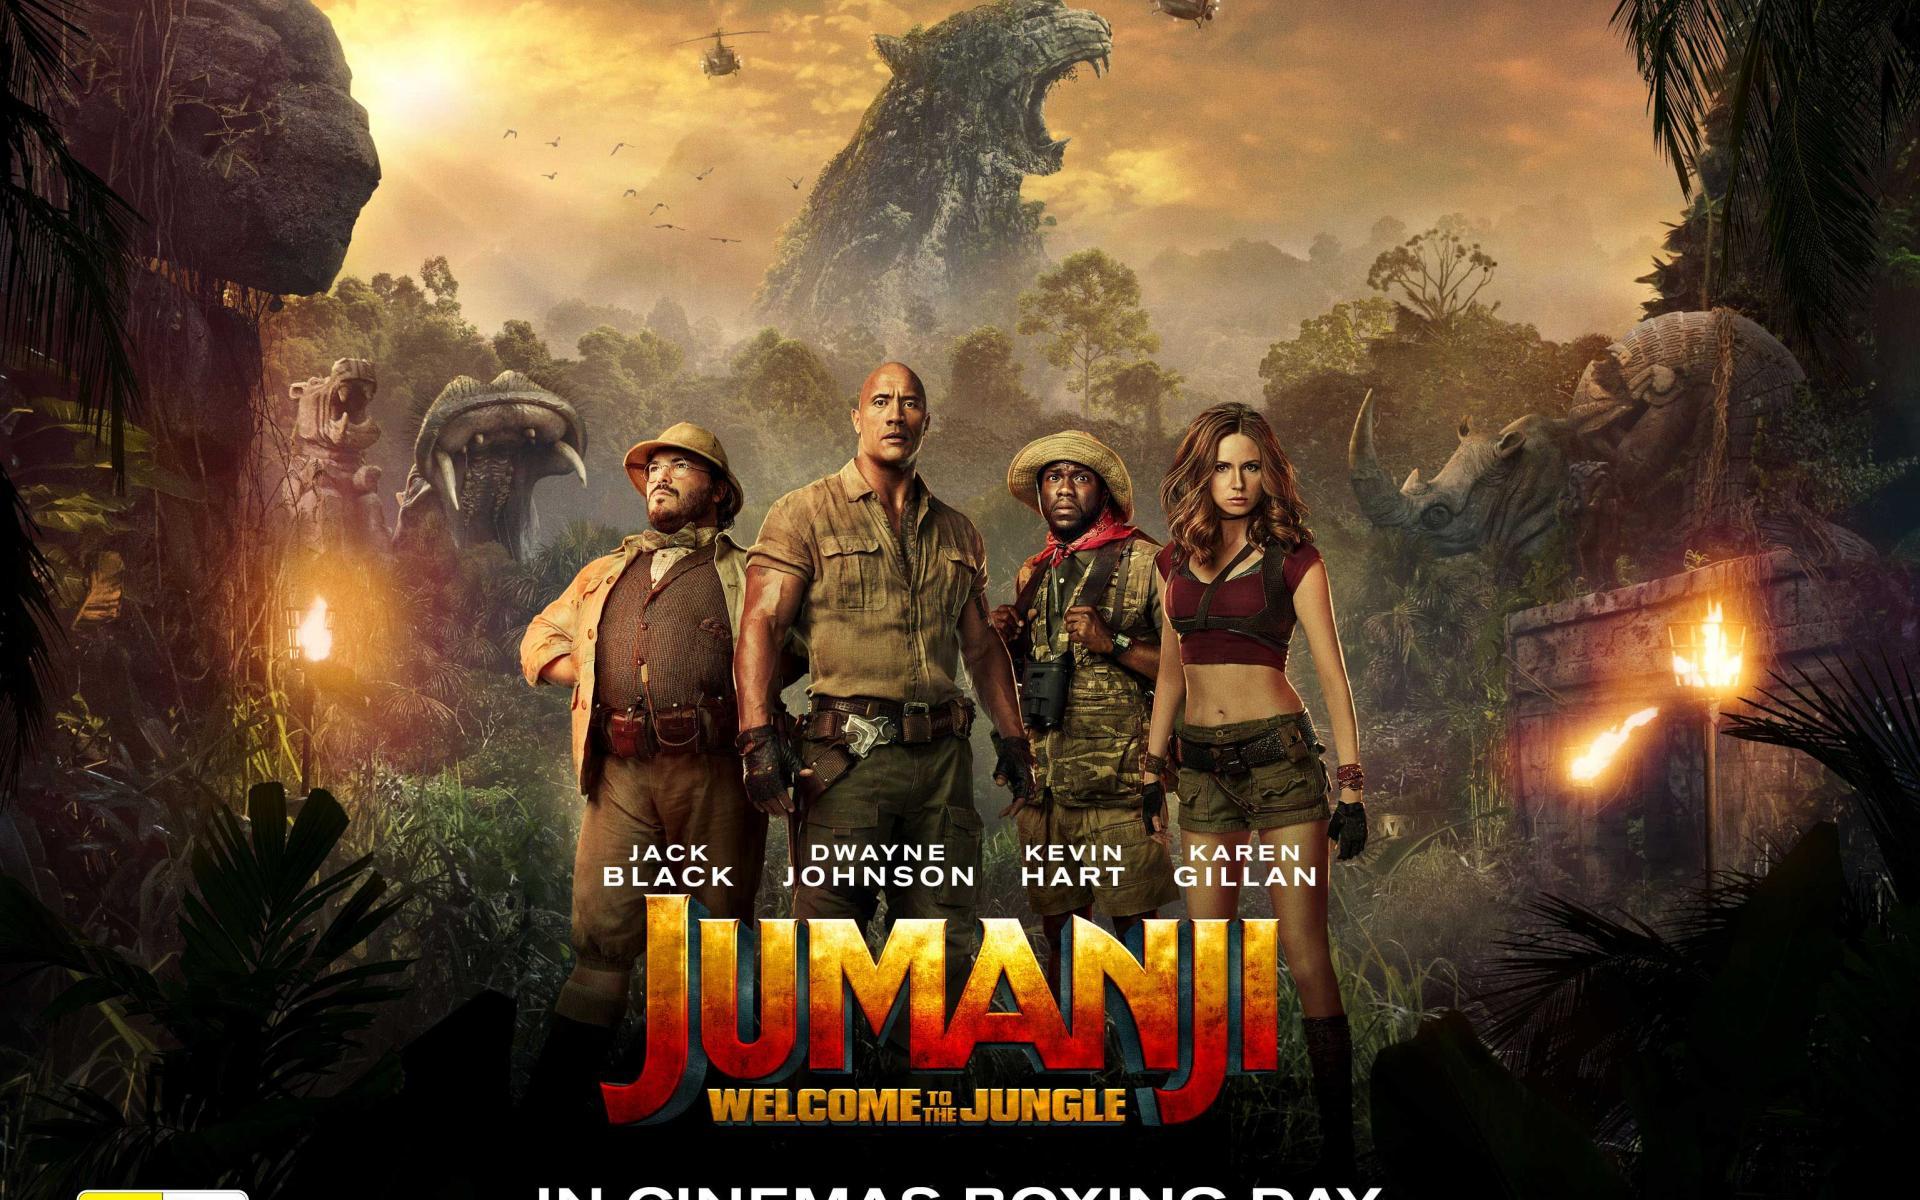 Jumanji Welcome to the Jungle HD Wallpapers  HD Wallpapers  ID 22480